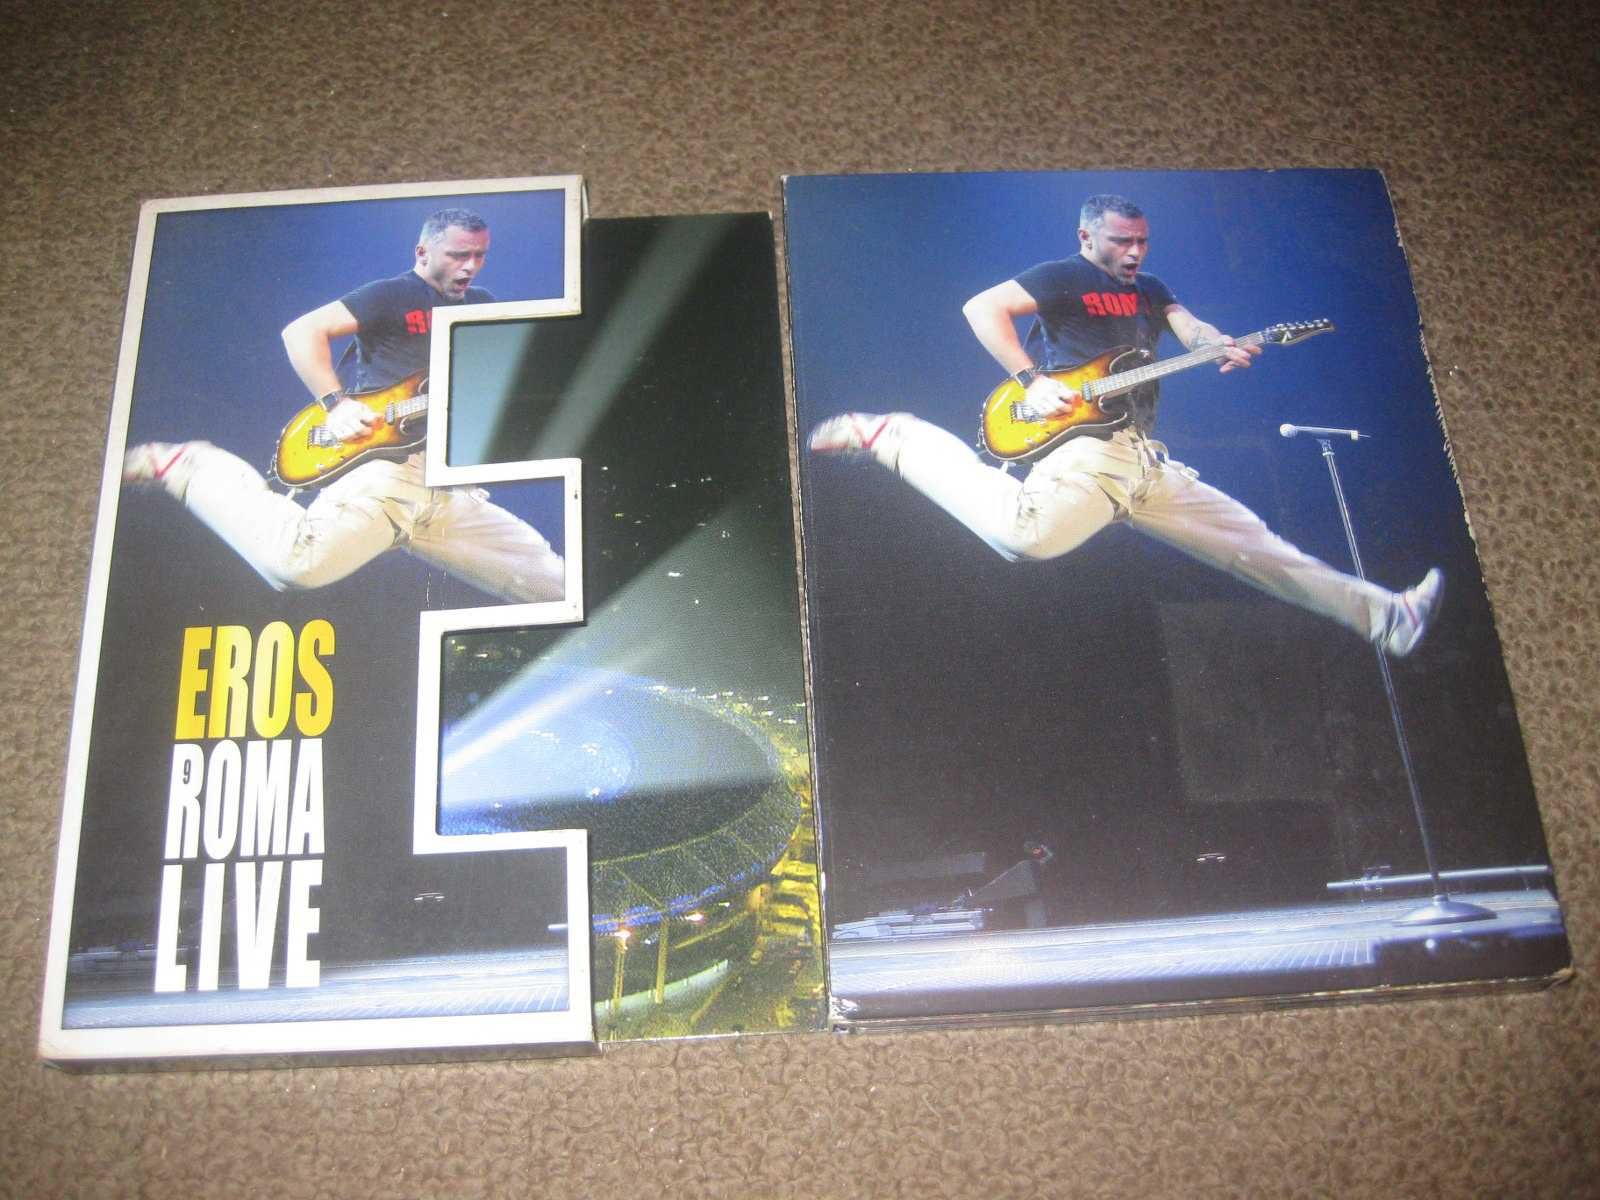 Eros Ramazzotti "Eros Roma Live" 2 DVDs/Digipack